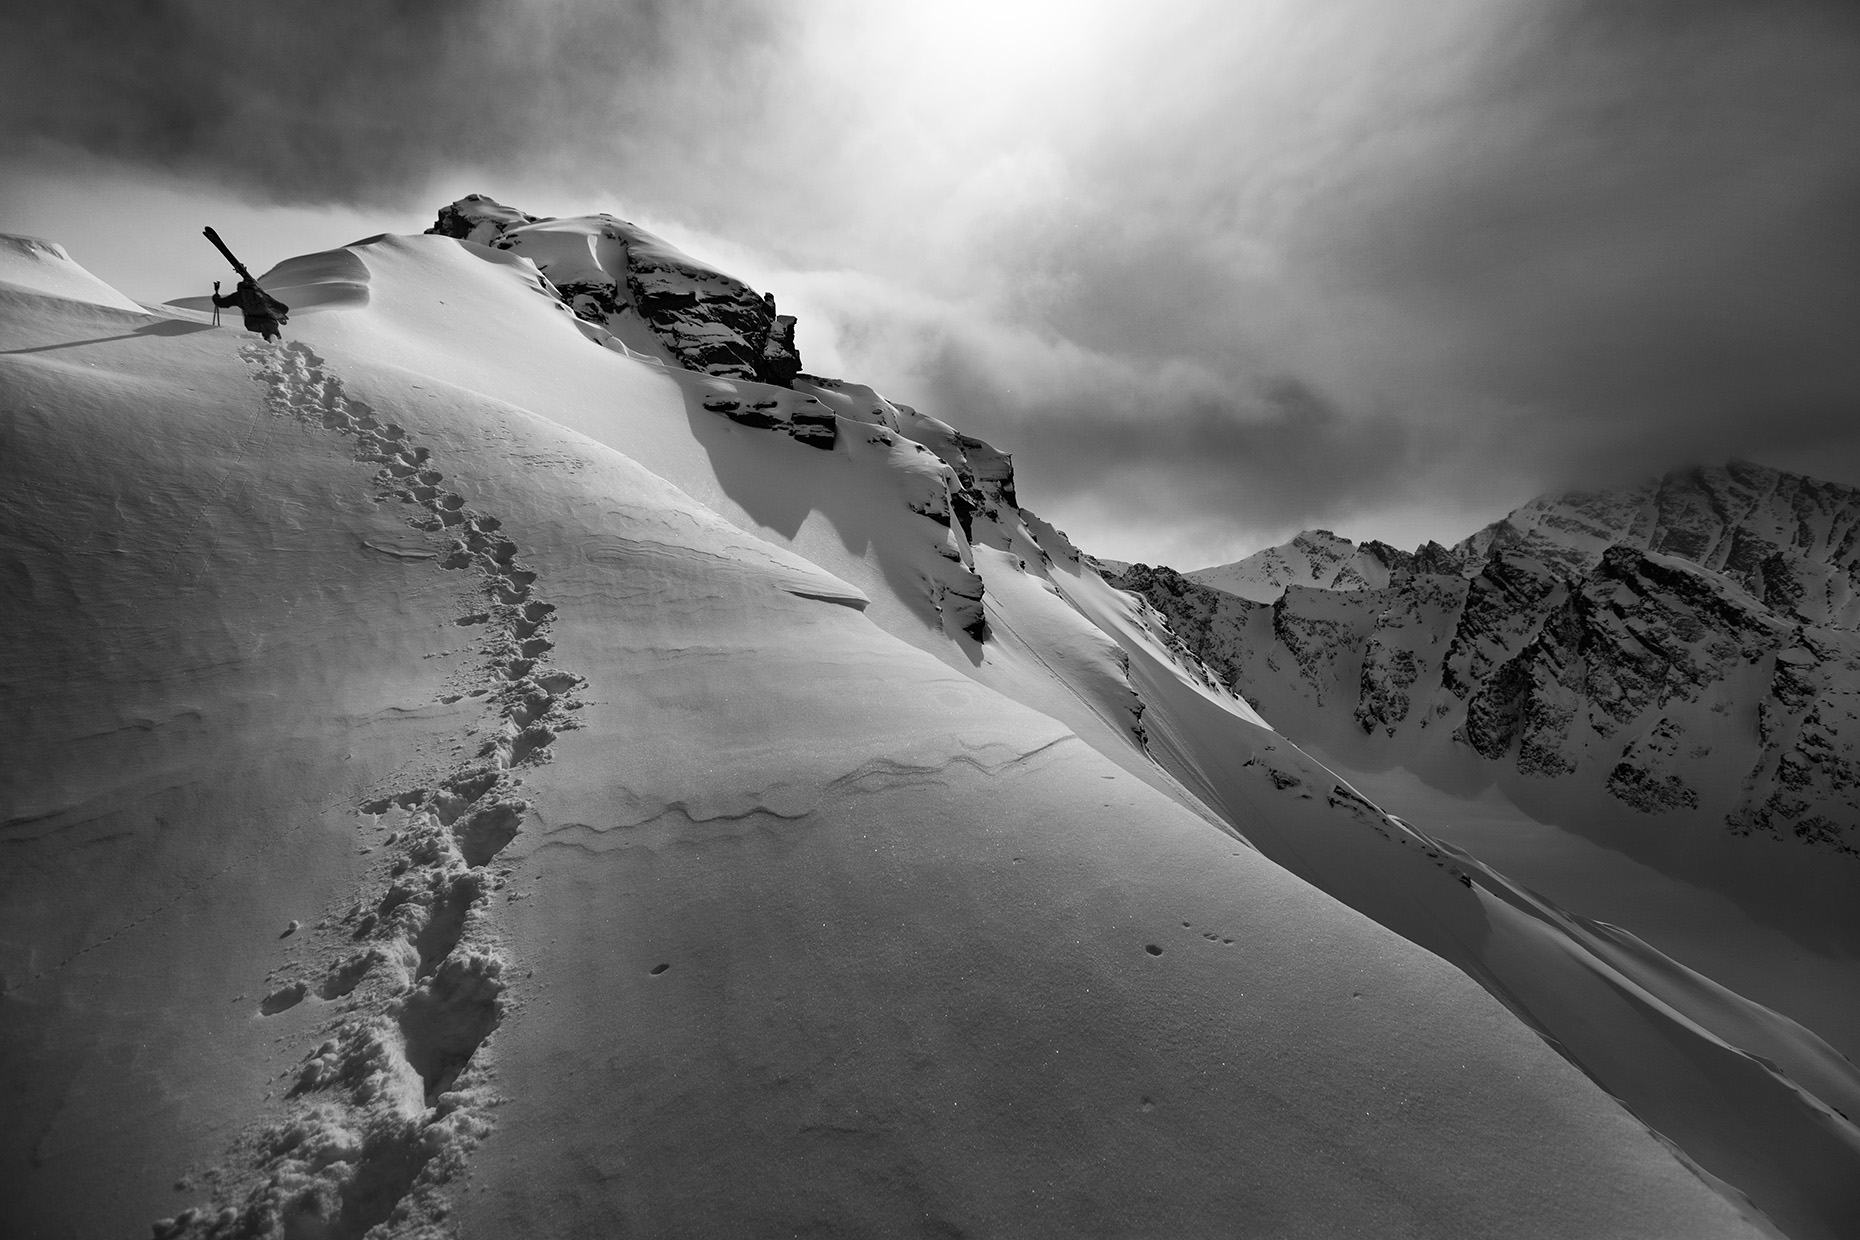 Rory Bushfield skis Alaska by Boston based commercial sports photographer Brian Nevins